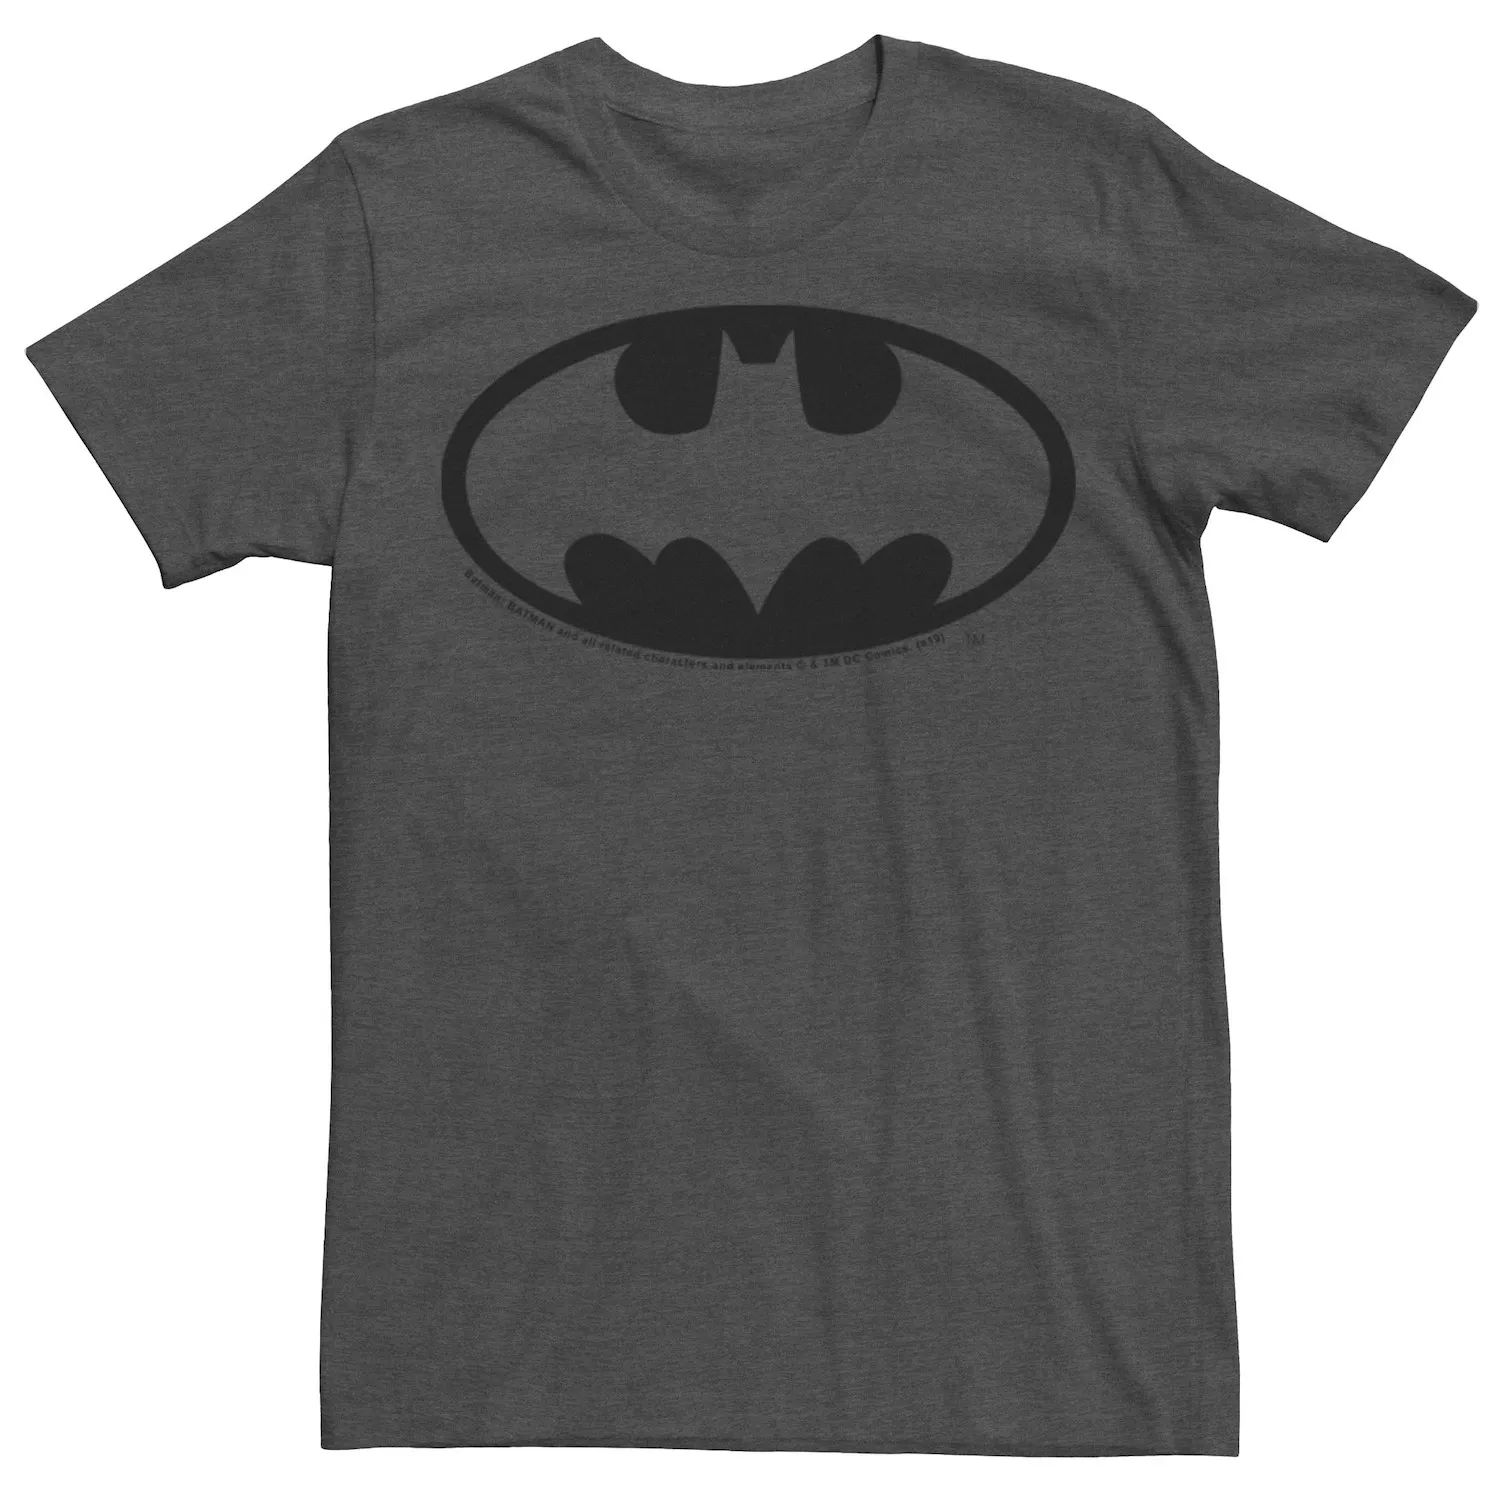 Мужская футболка с логотипом на груди и изображением Бэтмена DC Comics